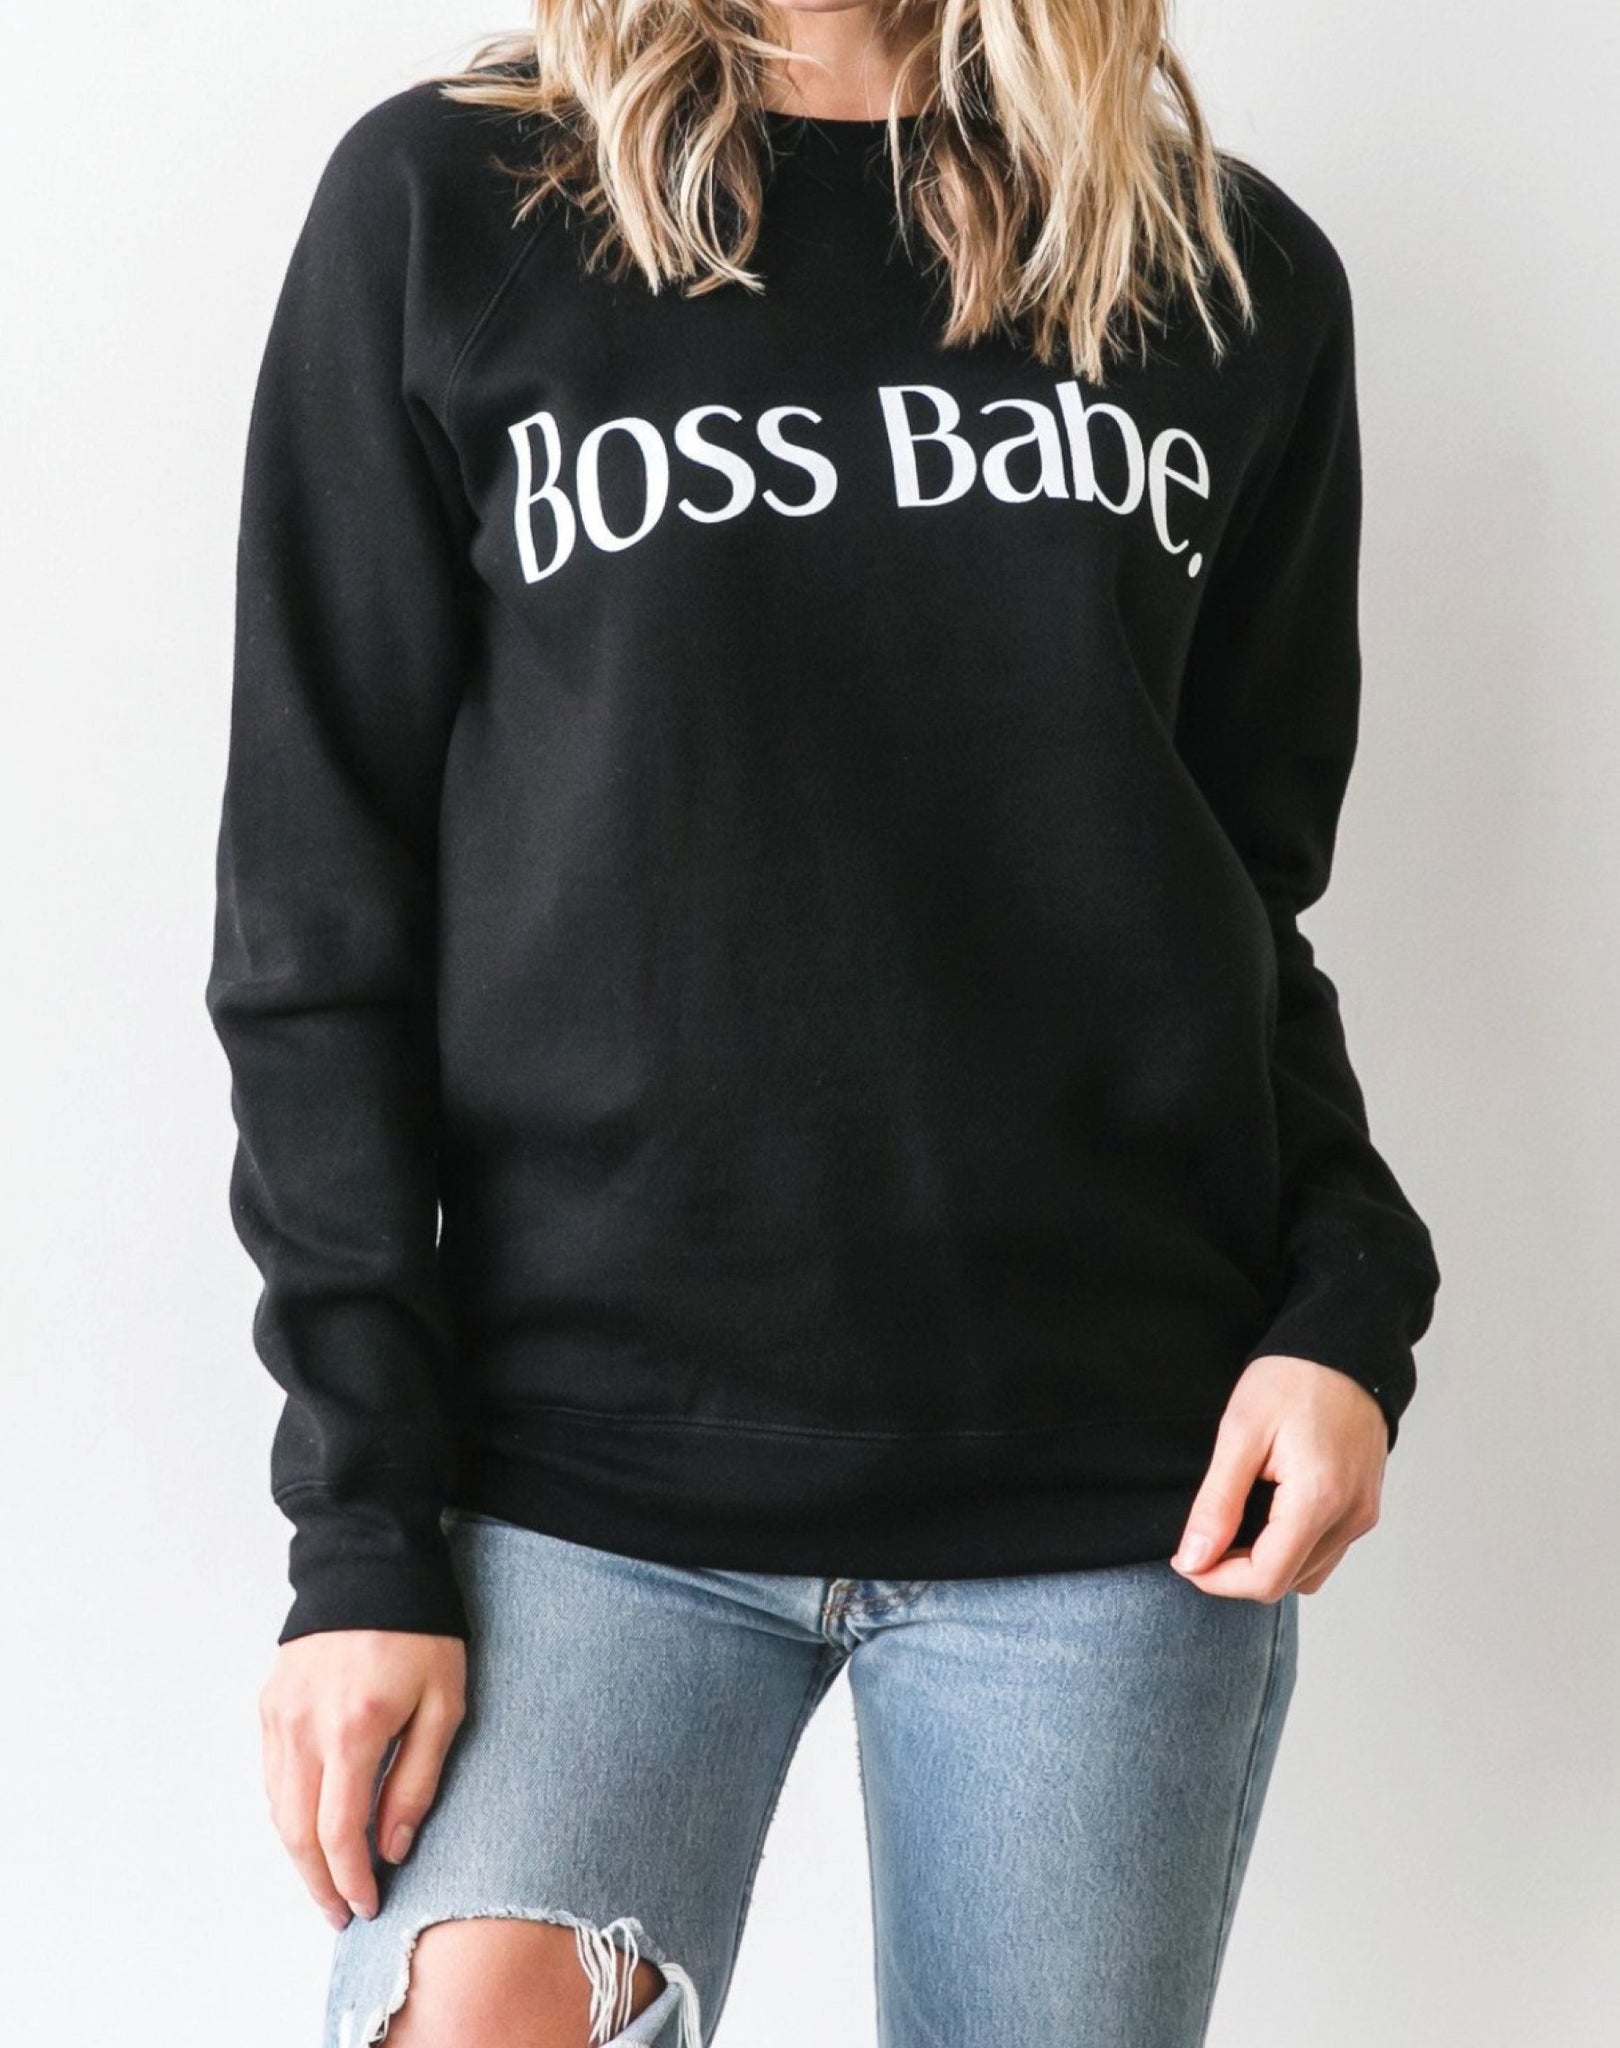 Classic Crew - "Boss Babe" | Black